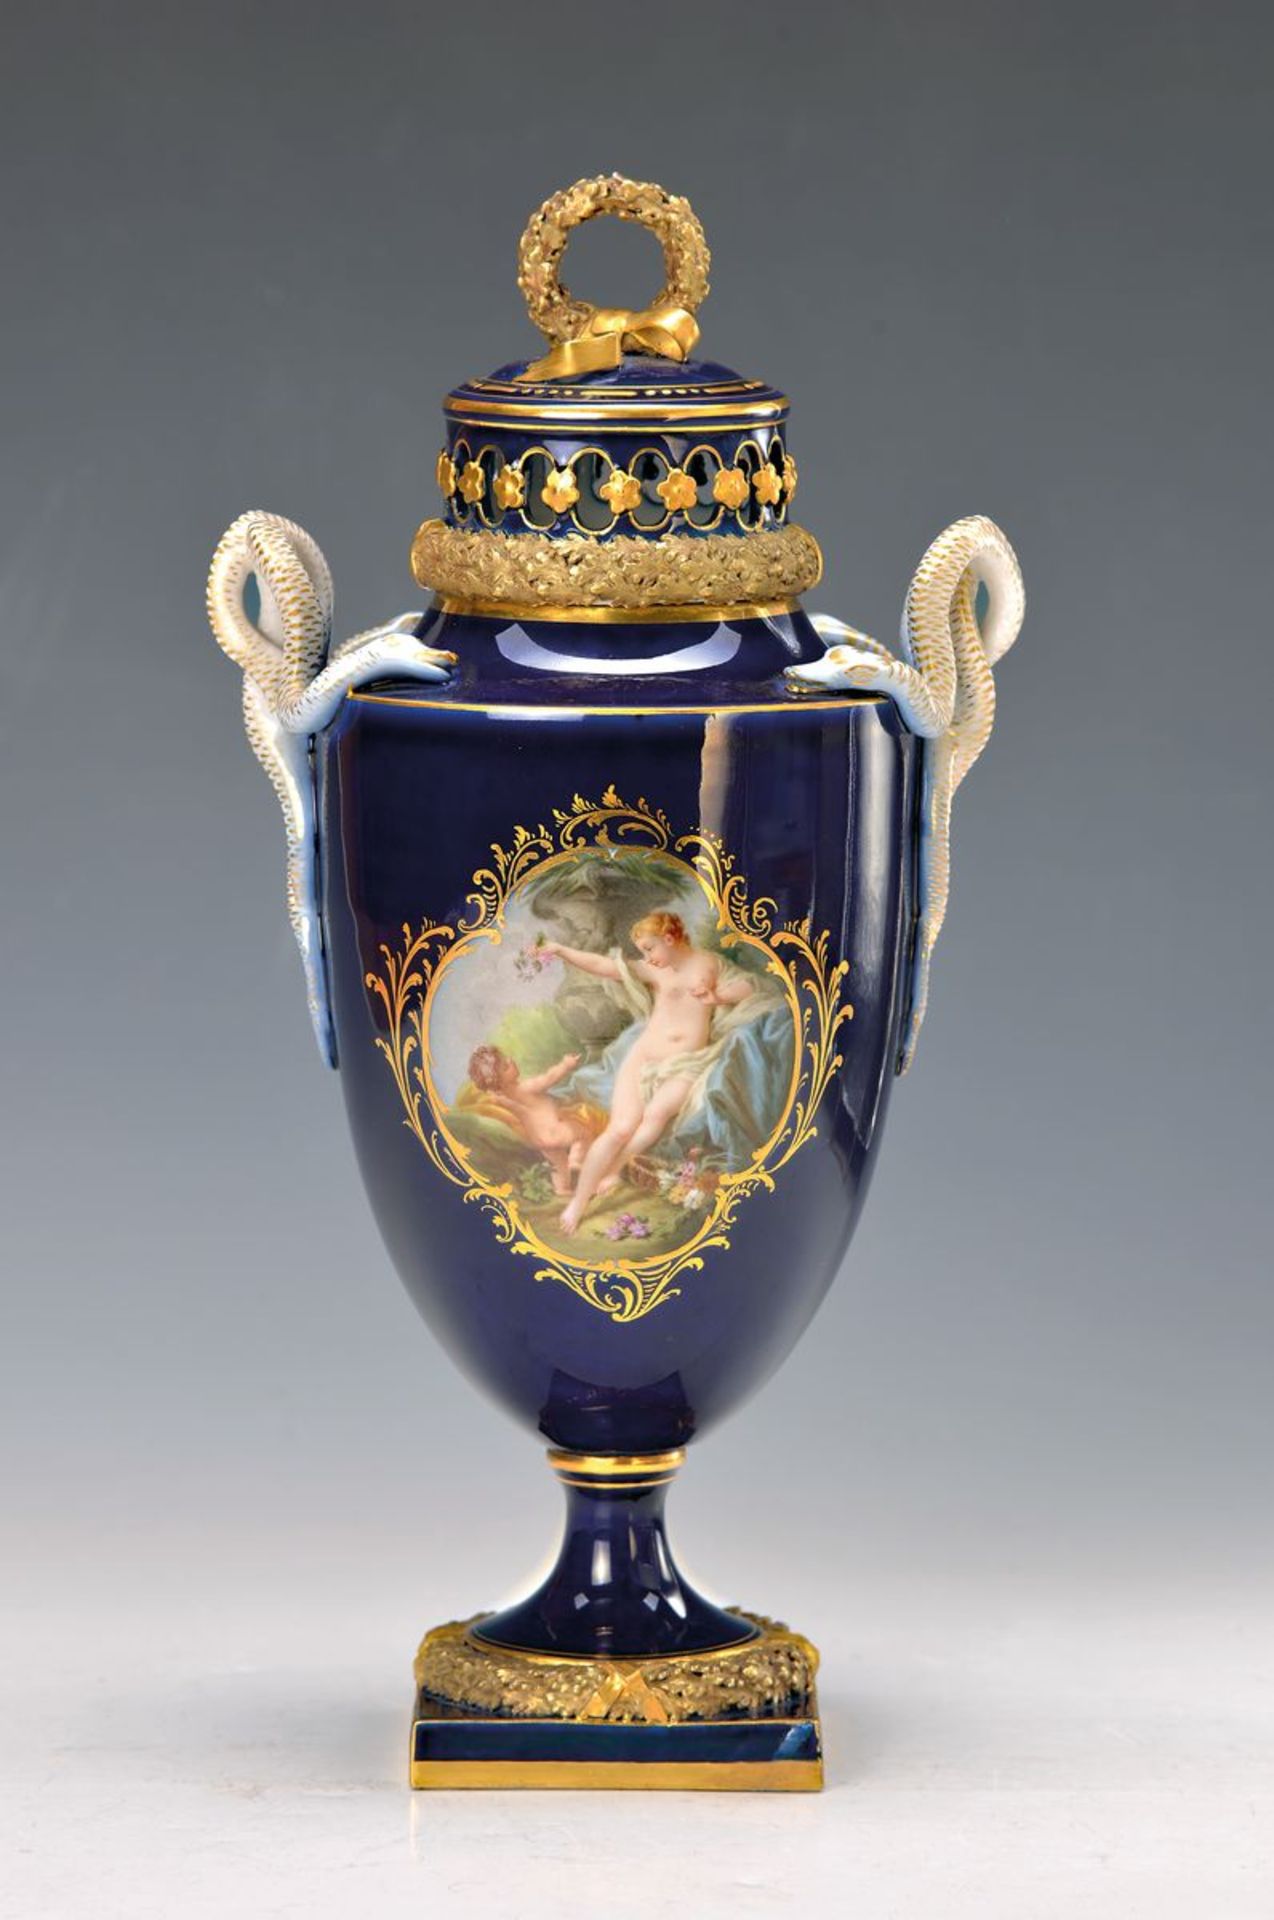 Pomp lidded vase, Meissen, around 1880/90, porcelain, cobalt blue ground, two-sided quality full